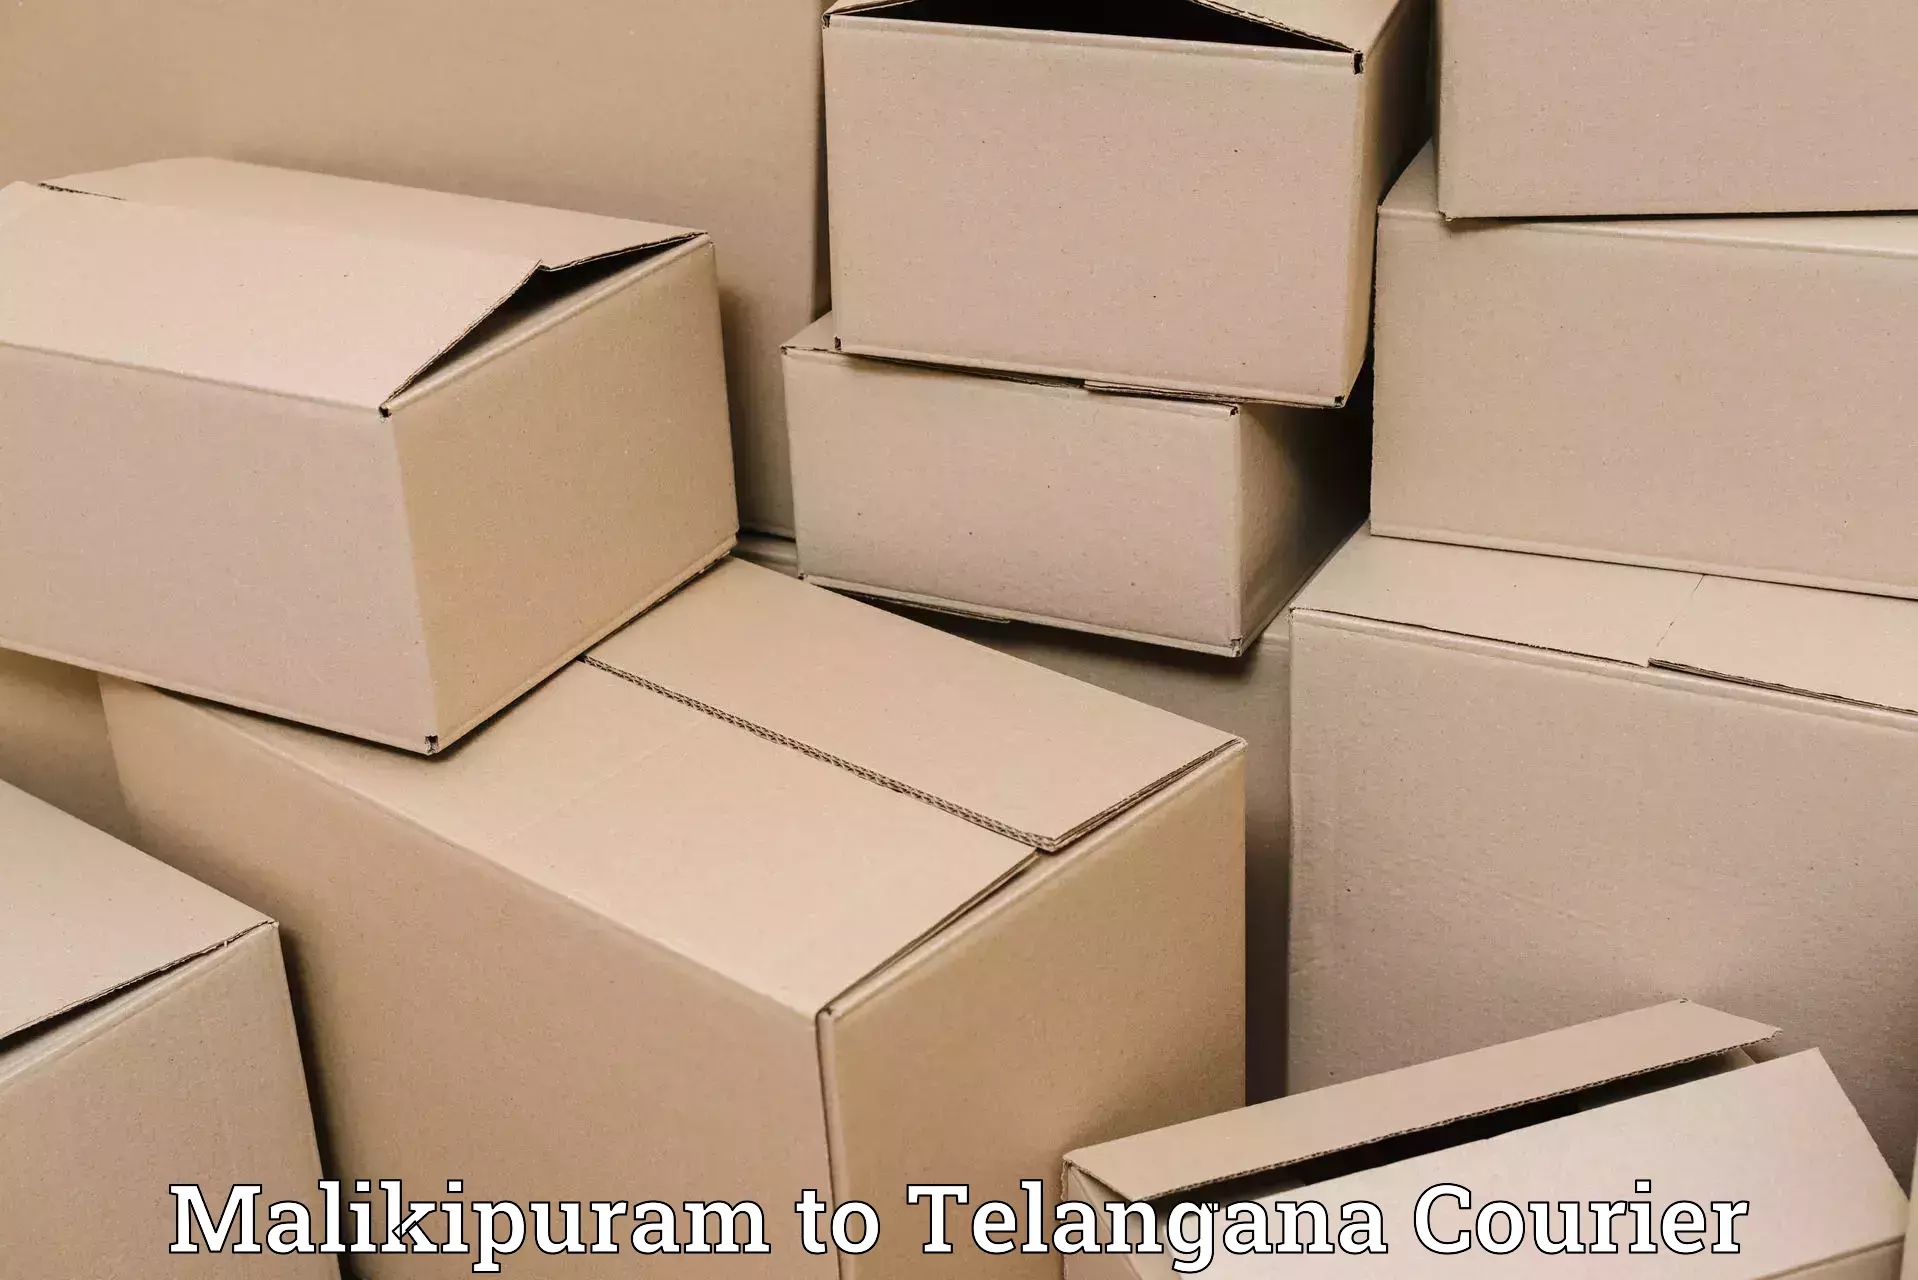 Efficient freight transportation Malikipuram to Telangana